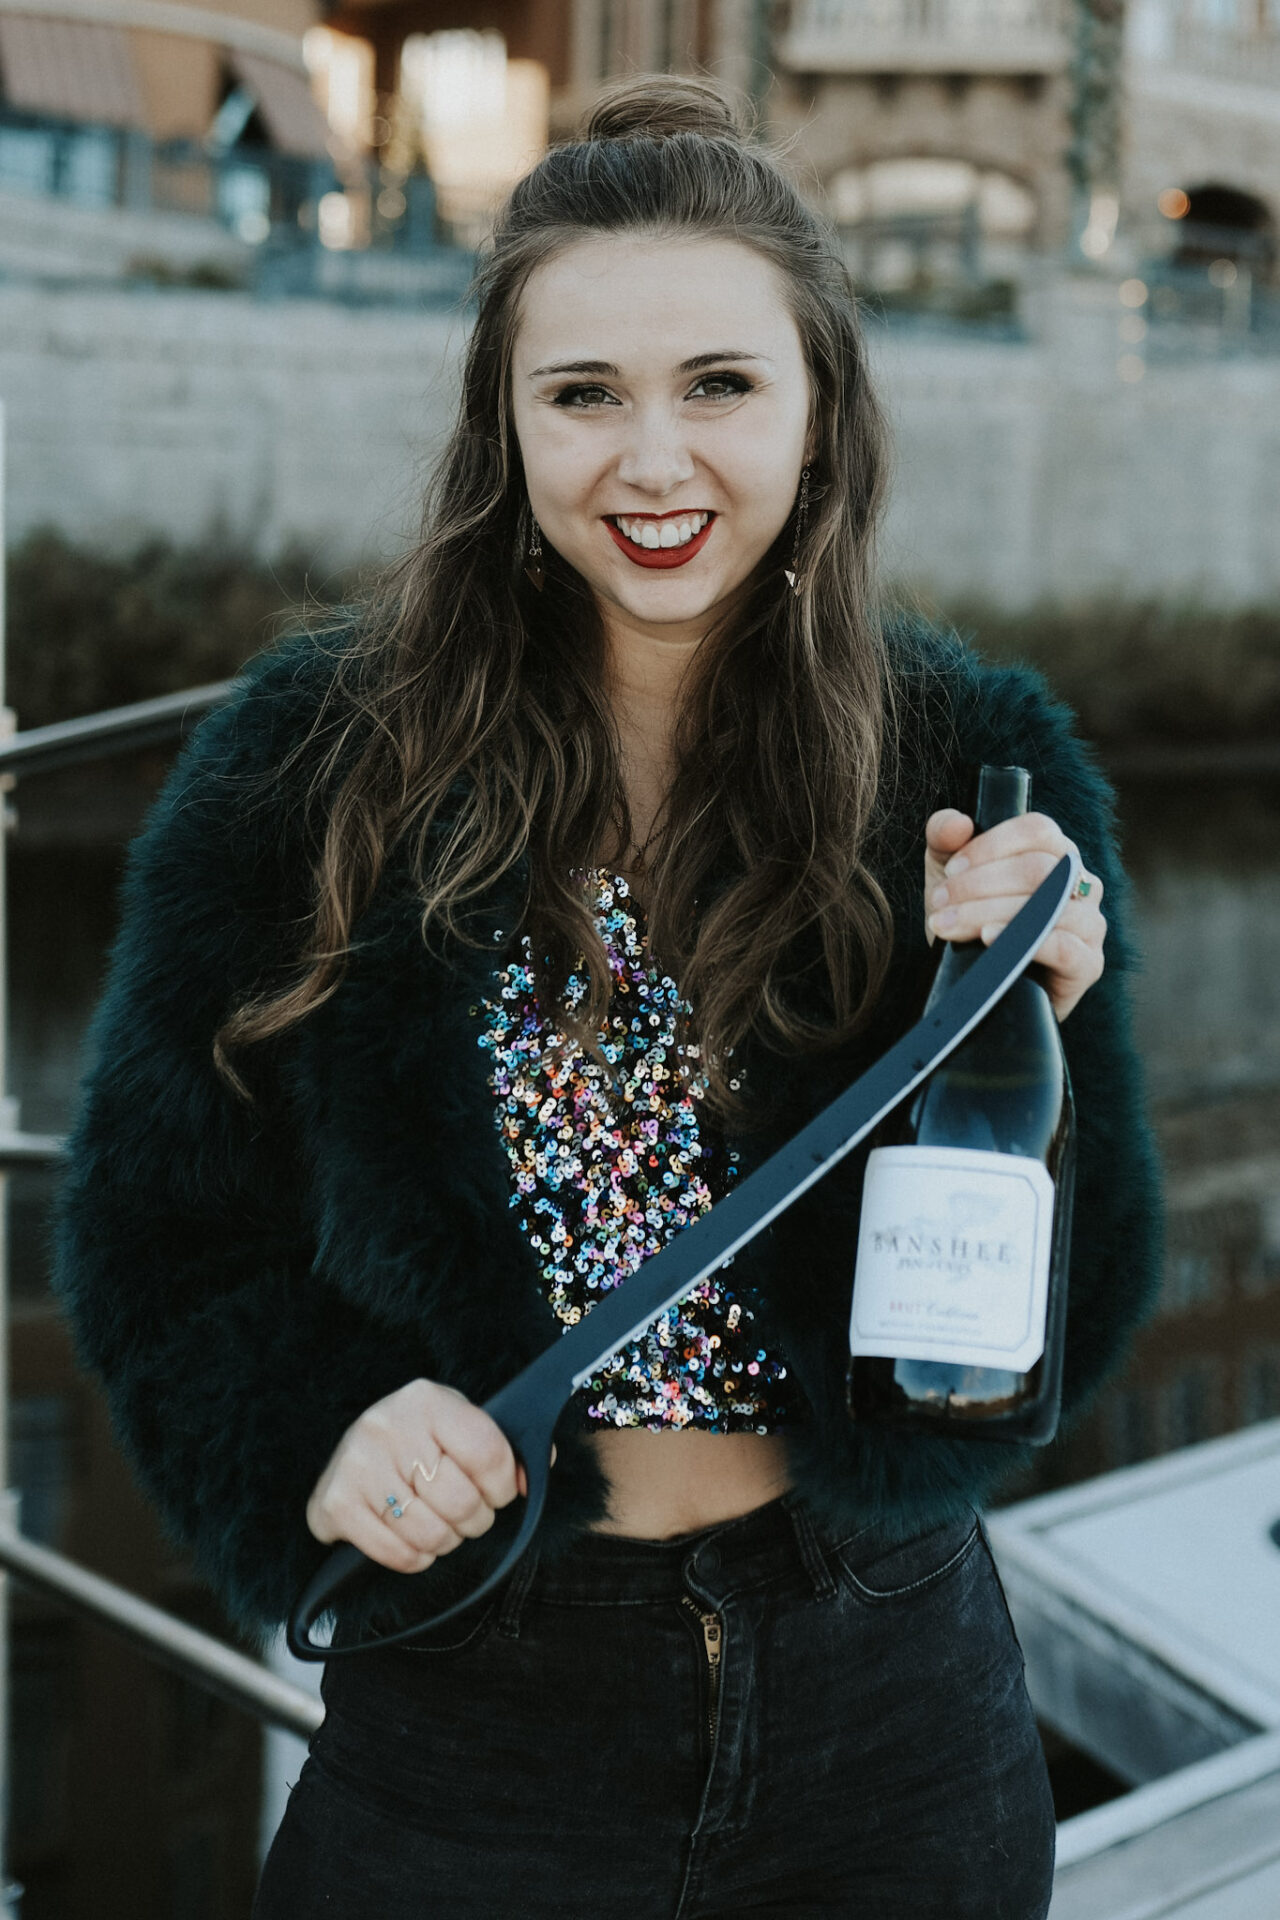 Paige holding Vinotive Champagne Saber